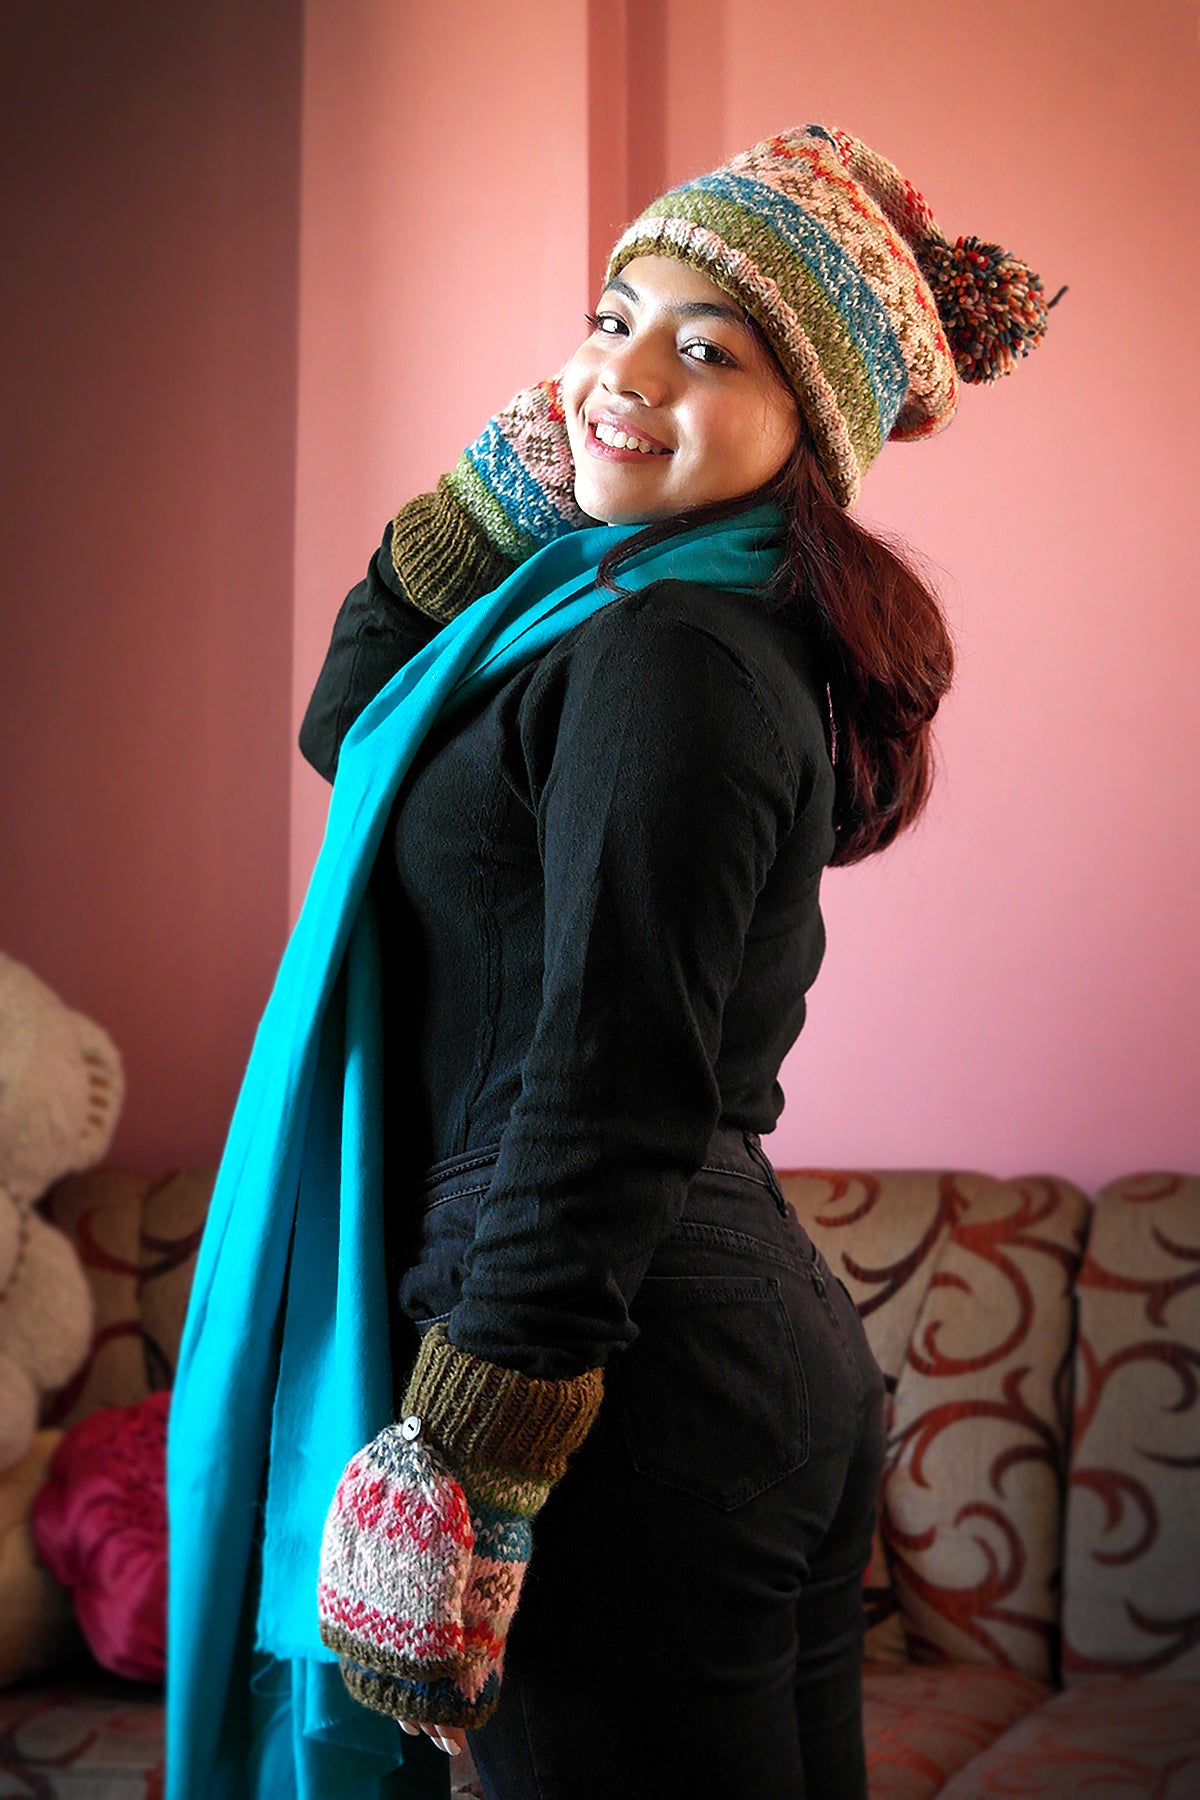 Womens Knit Winter Warm Pom Pom Beanie Hat Olive Green and Pink